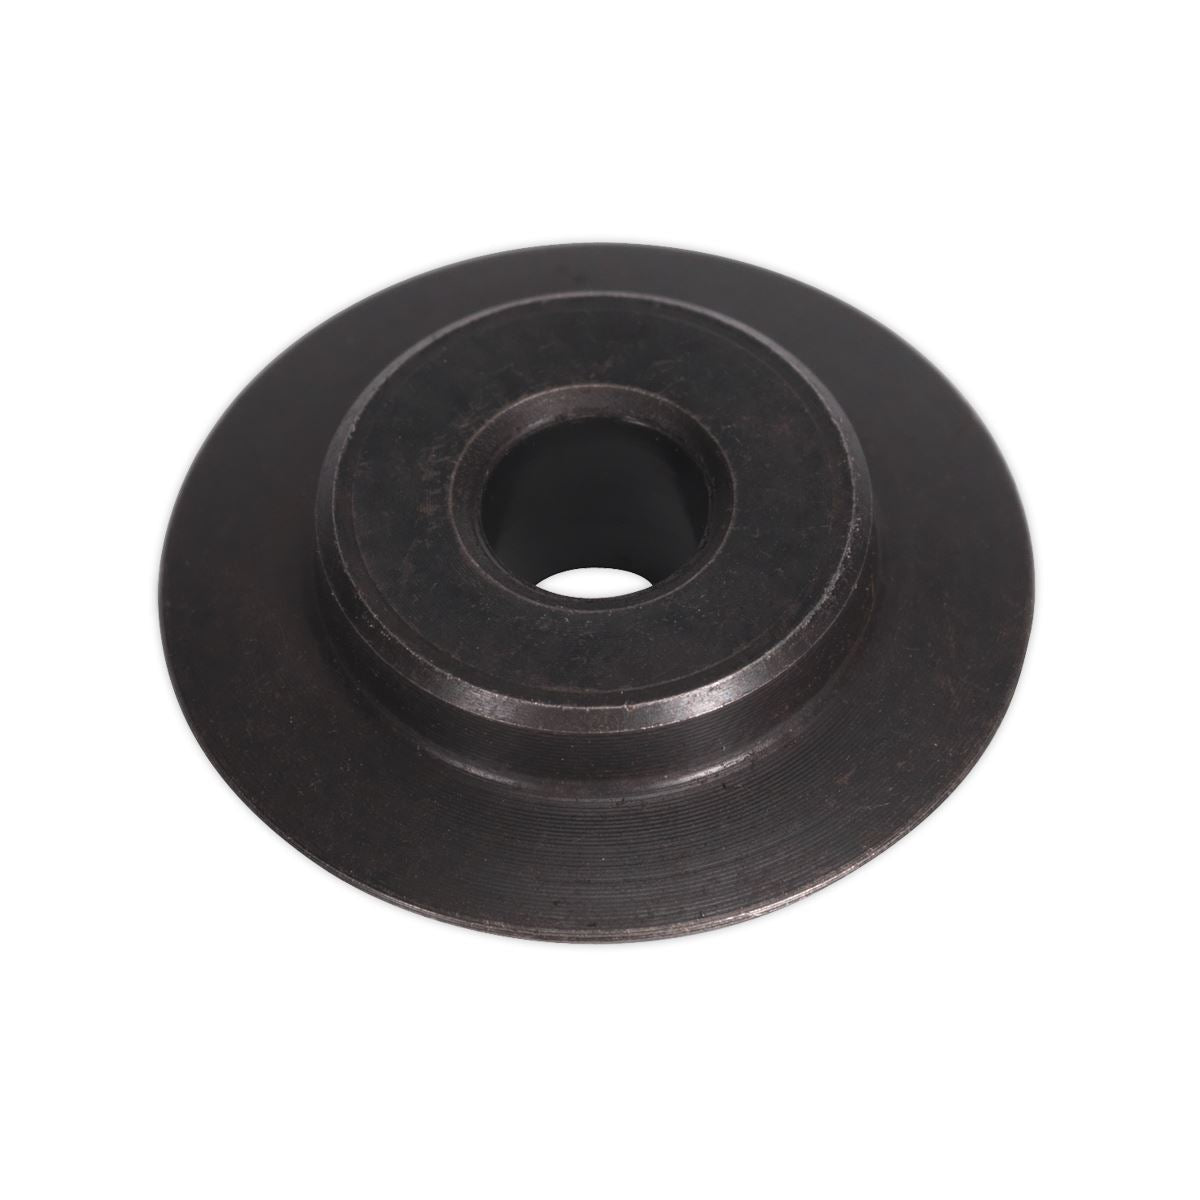 Sealey Cutting Wheel for VS16371